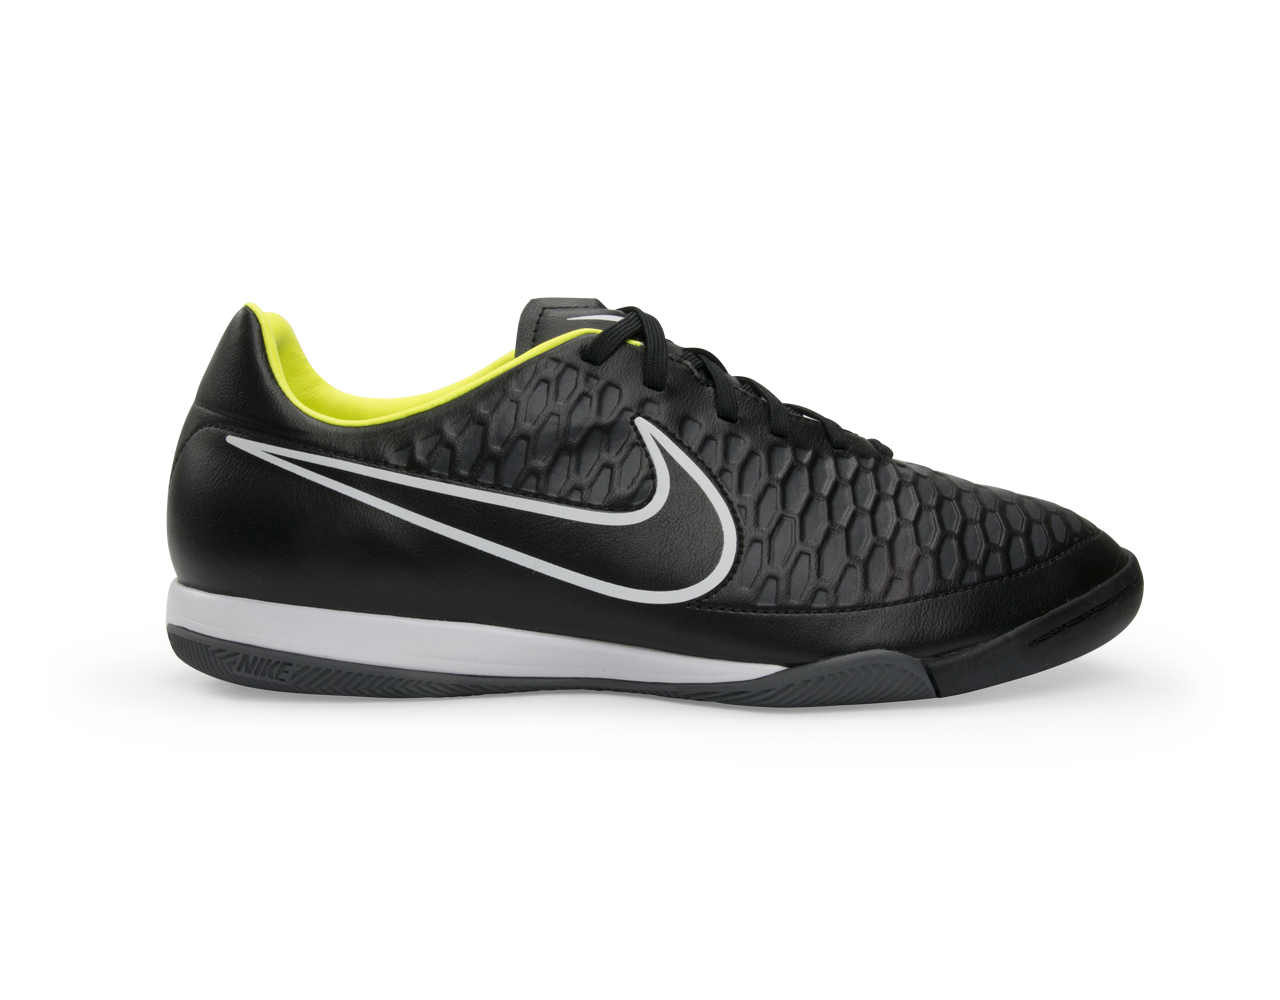 Nike Men's Magista Onda Indoor Soccer Shoes Black/Black/Volt/White